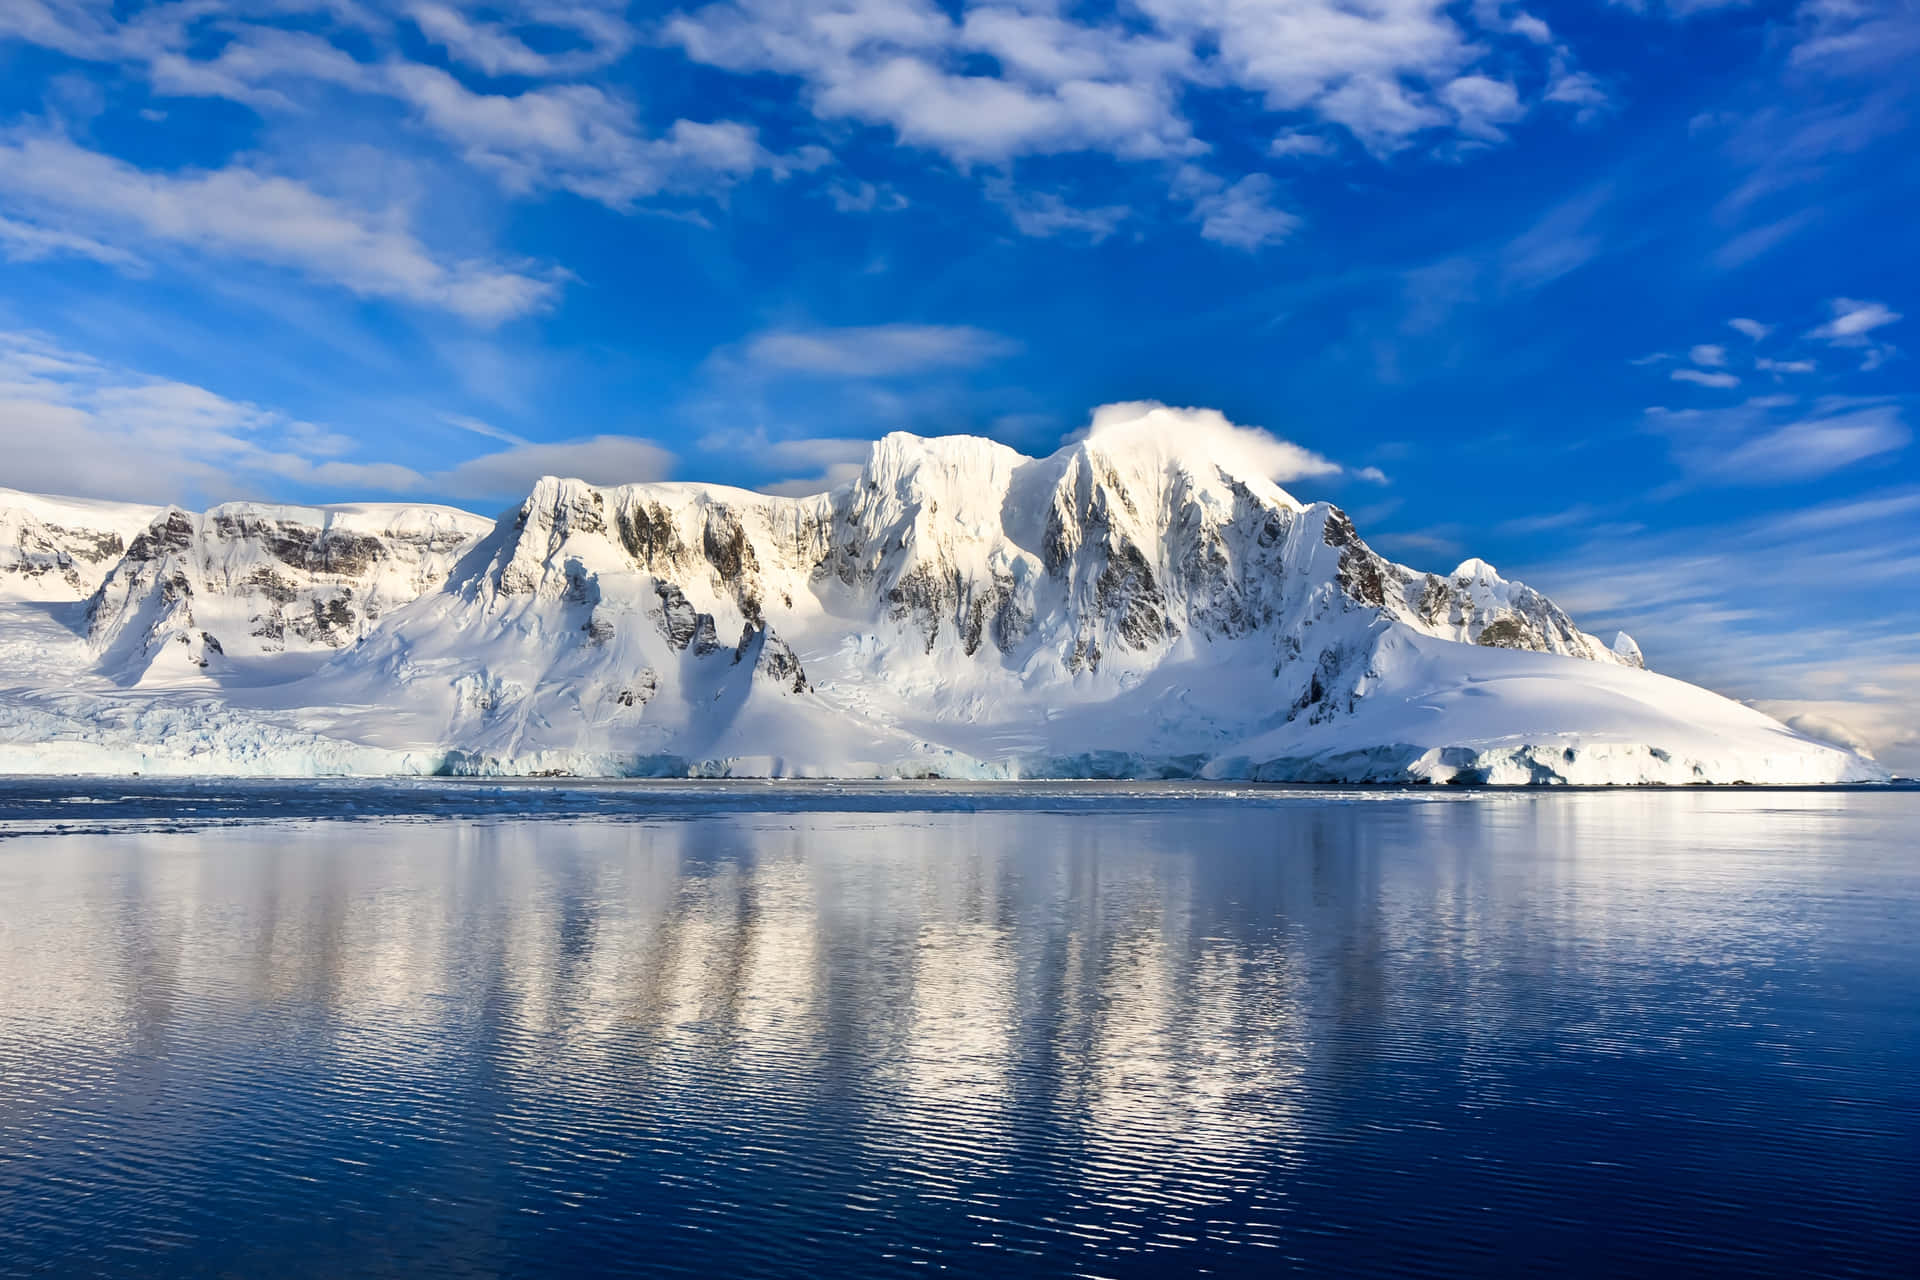 "Experience the Magic of Antarctica"